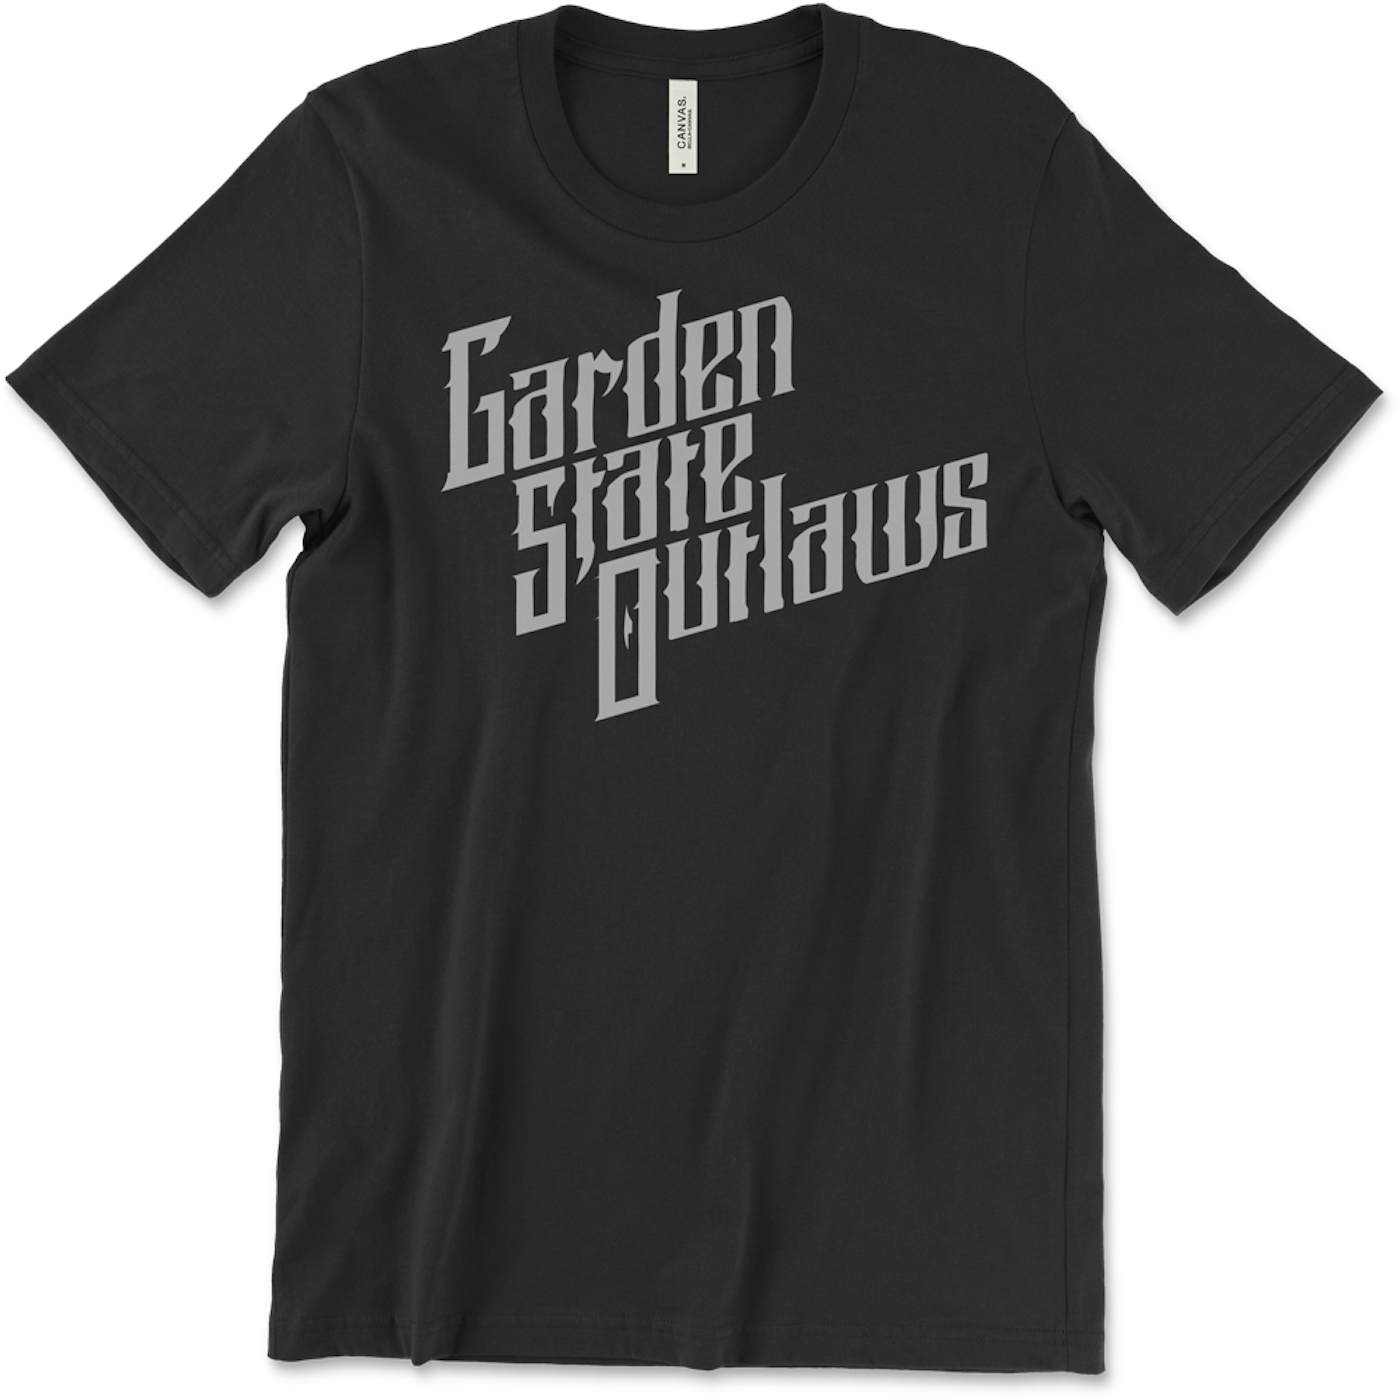 Garden State Outlaws - Digital EP T-Shirt Bundle